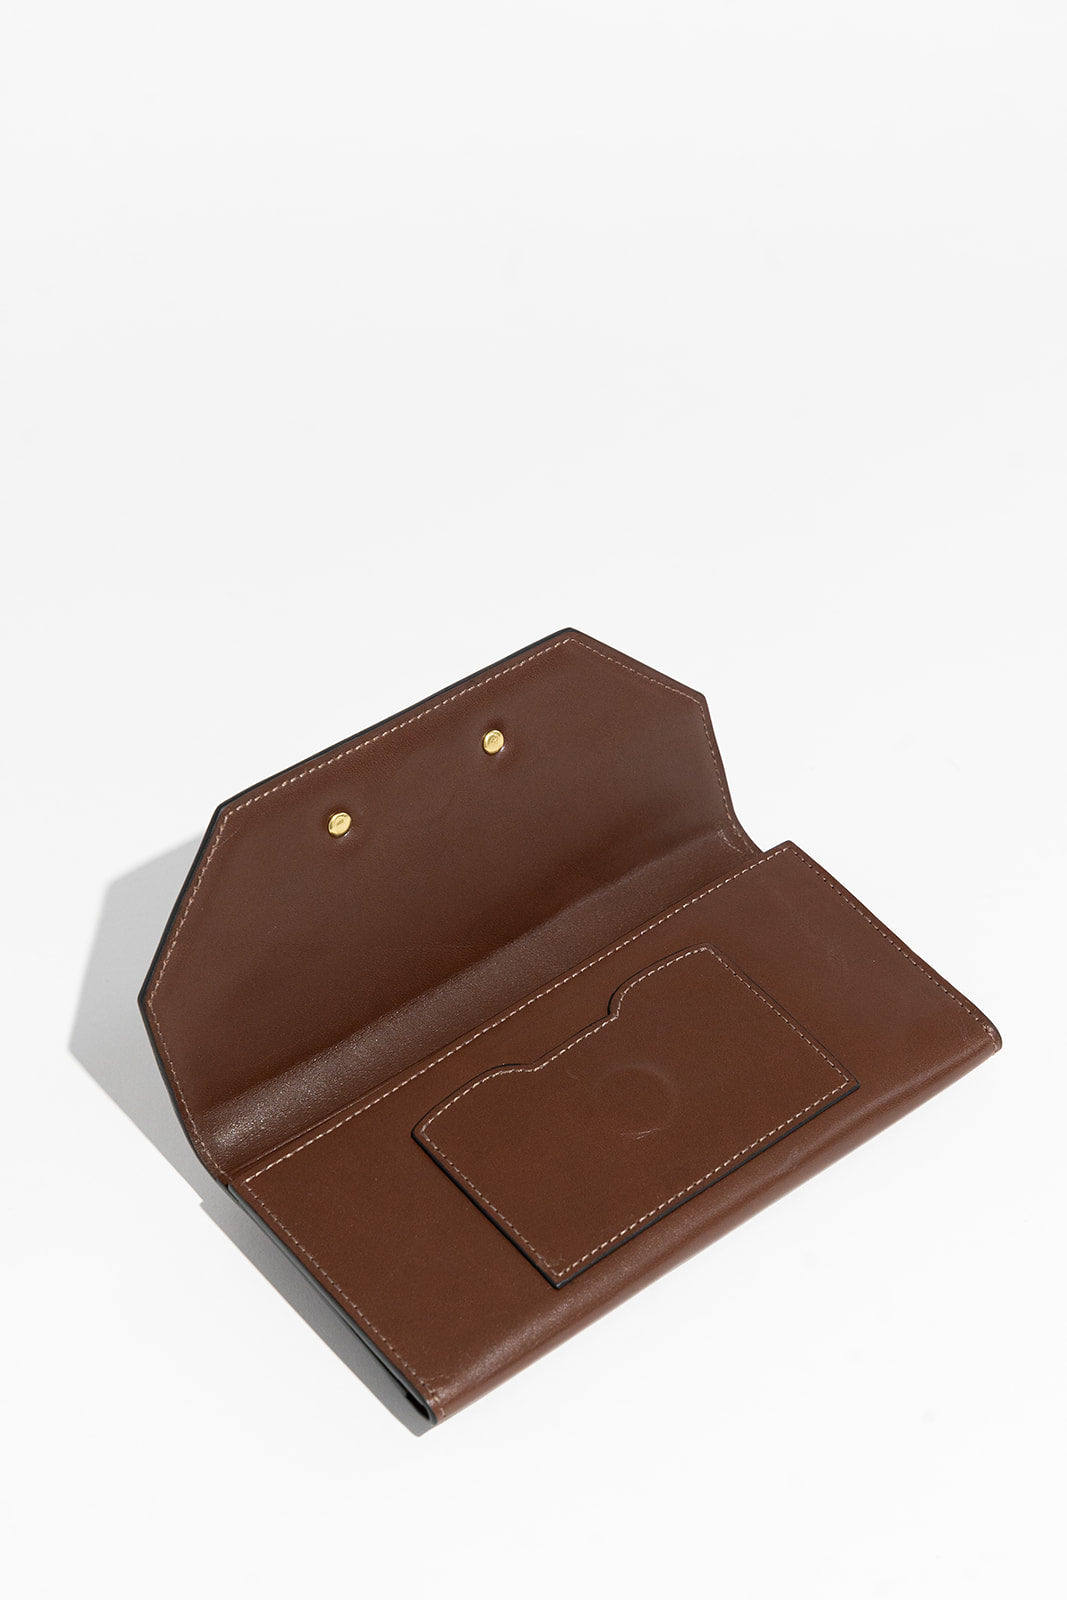 1869 Wallet | Premium Brown Leather